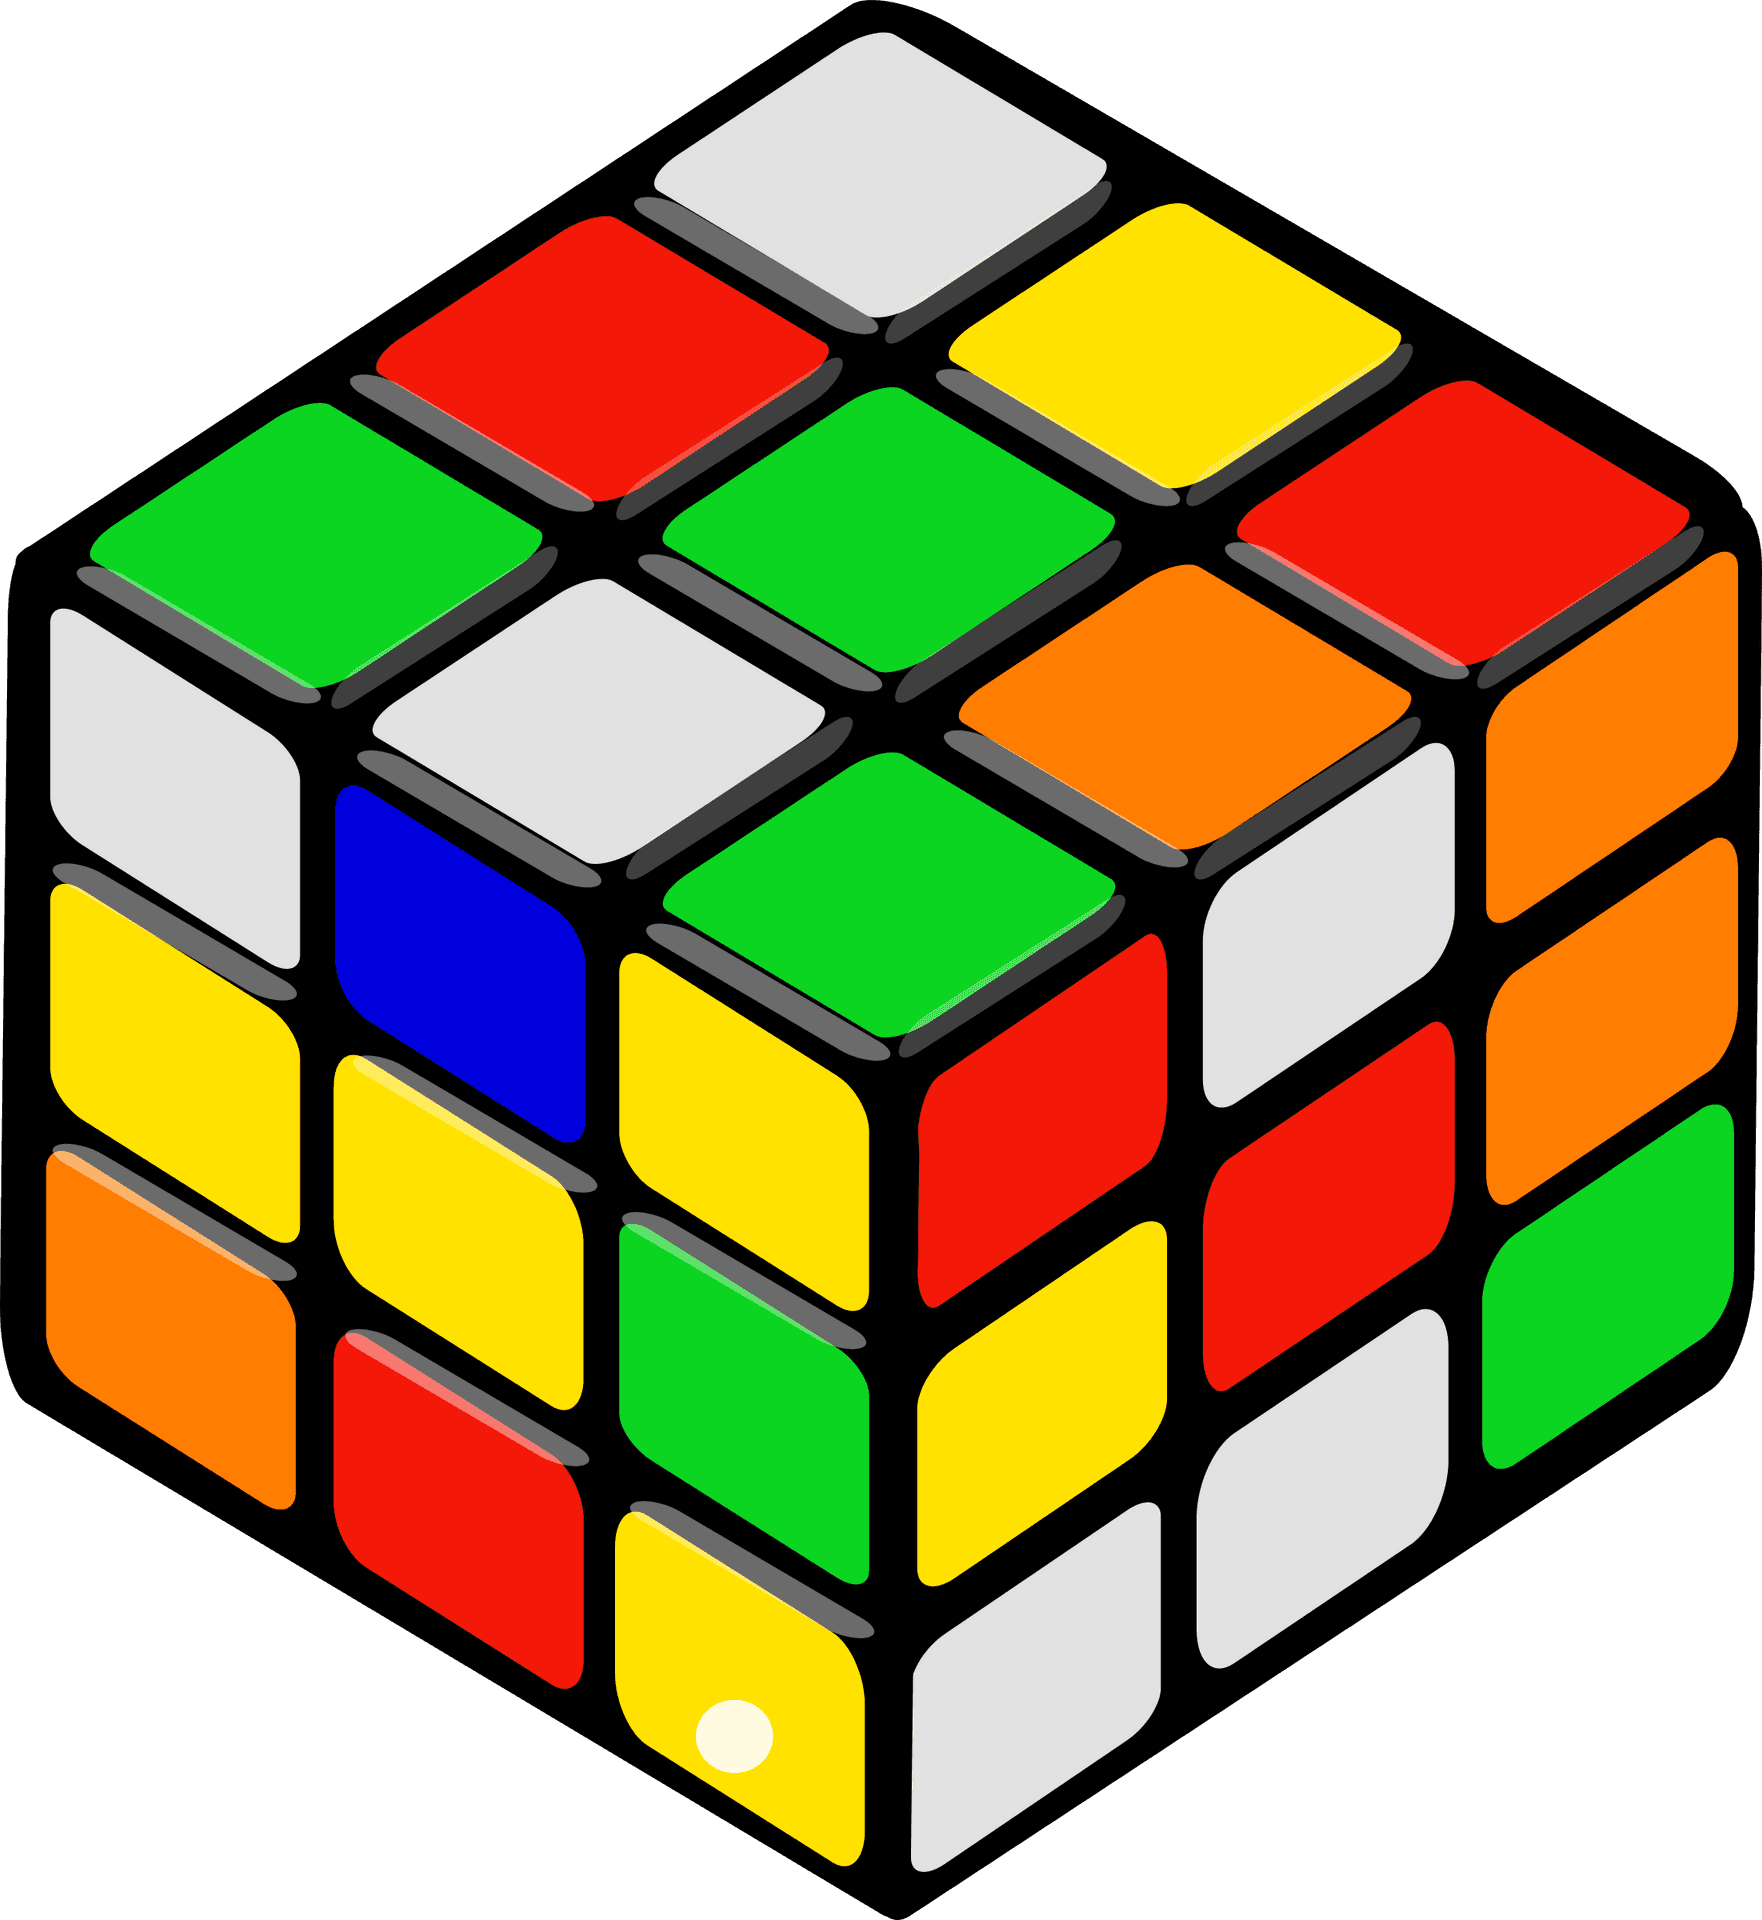 Unsolved Rubiks Cube Illustration.png PNG